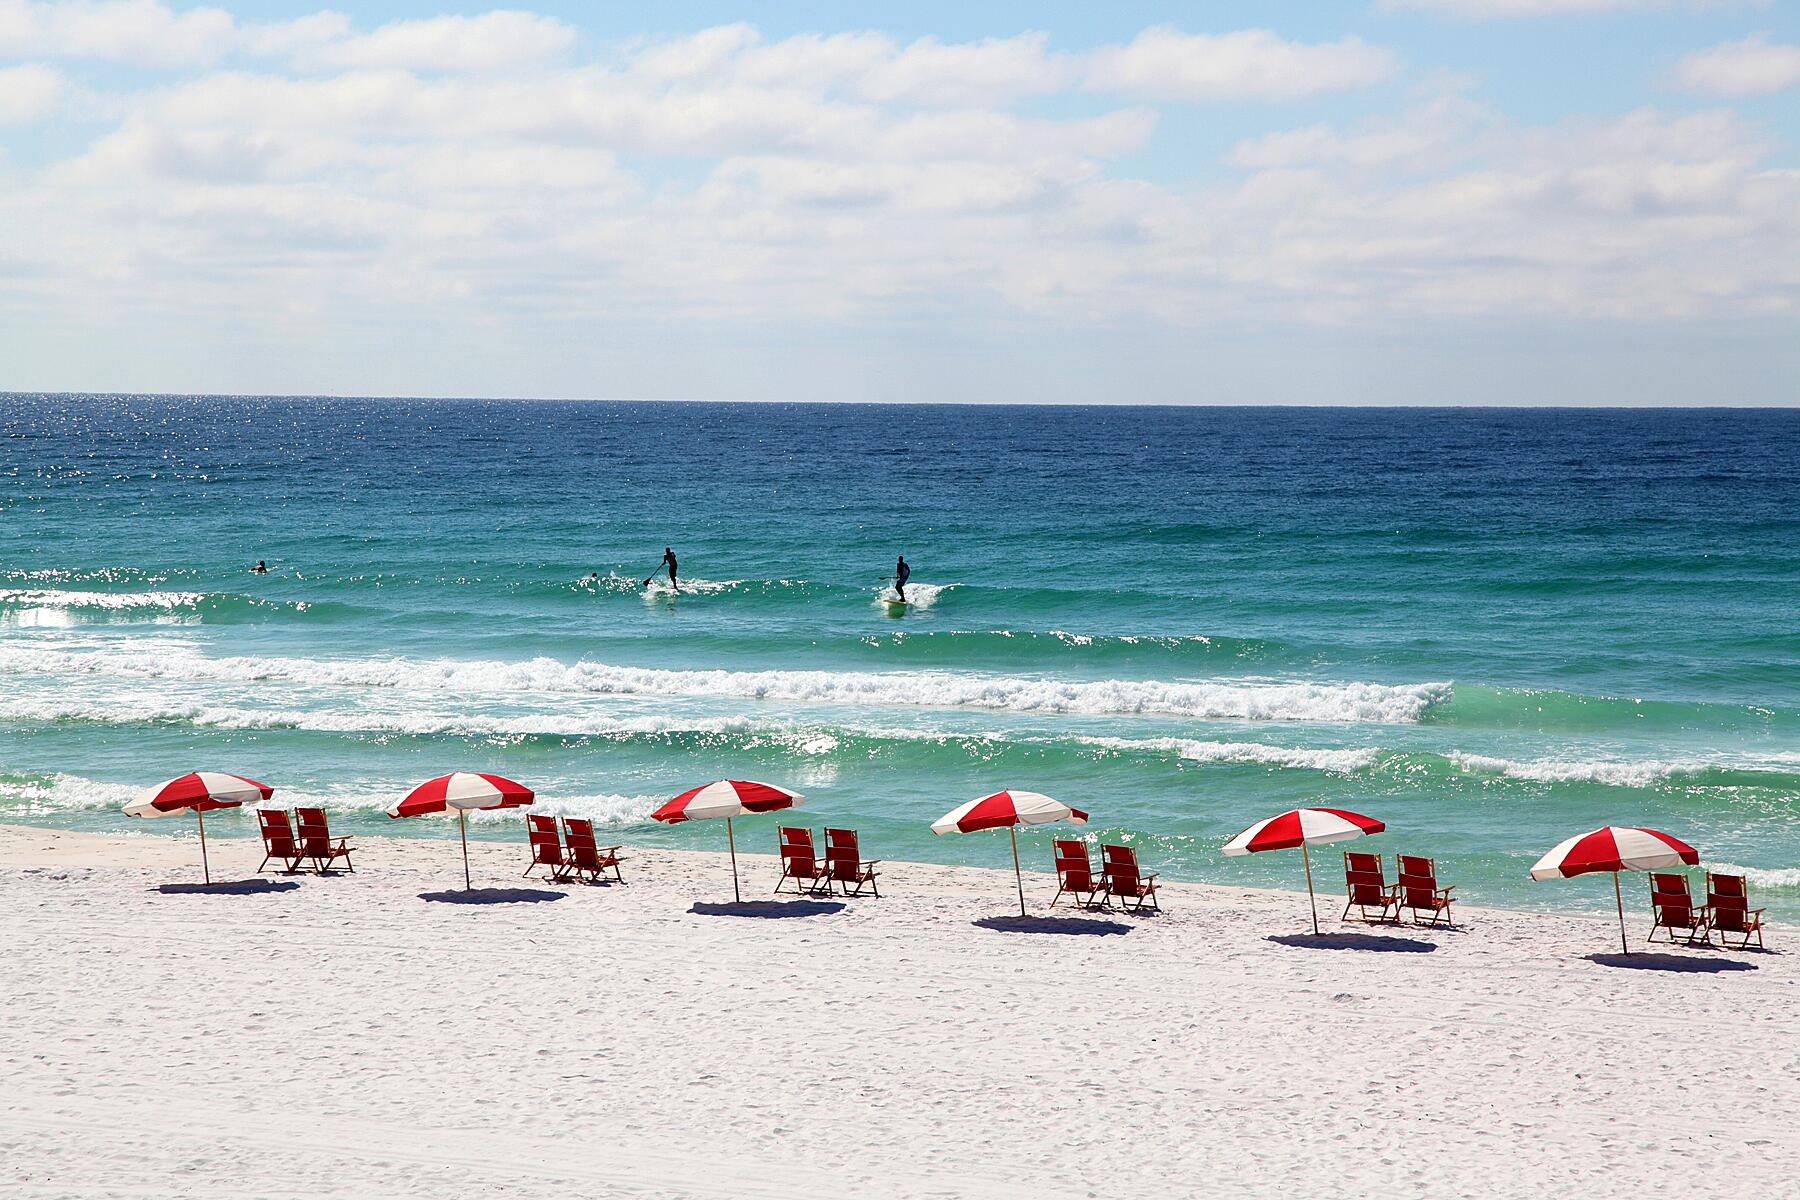 Beaches In Florida